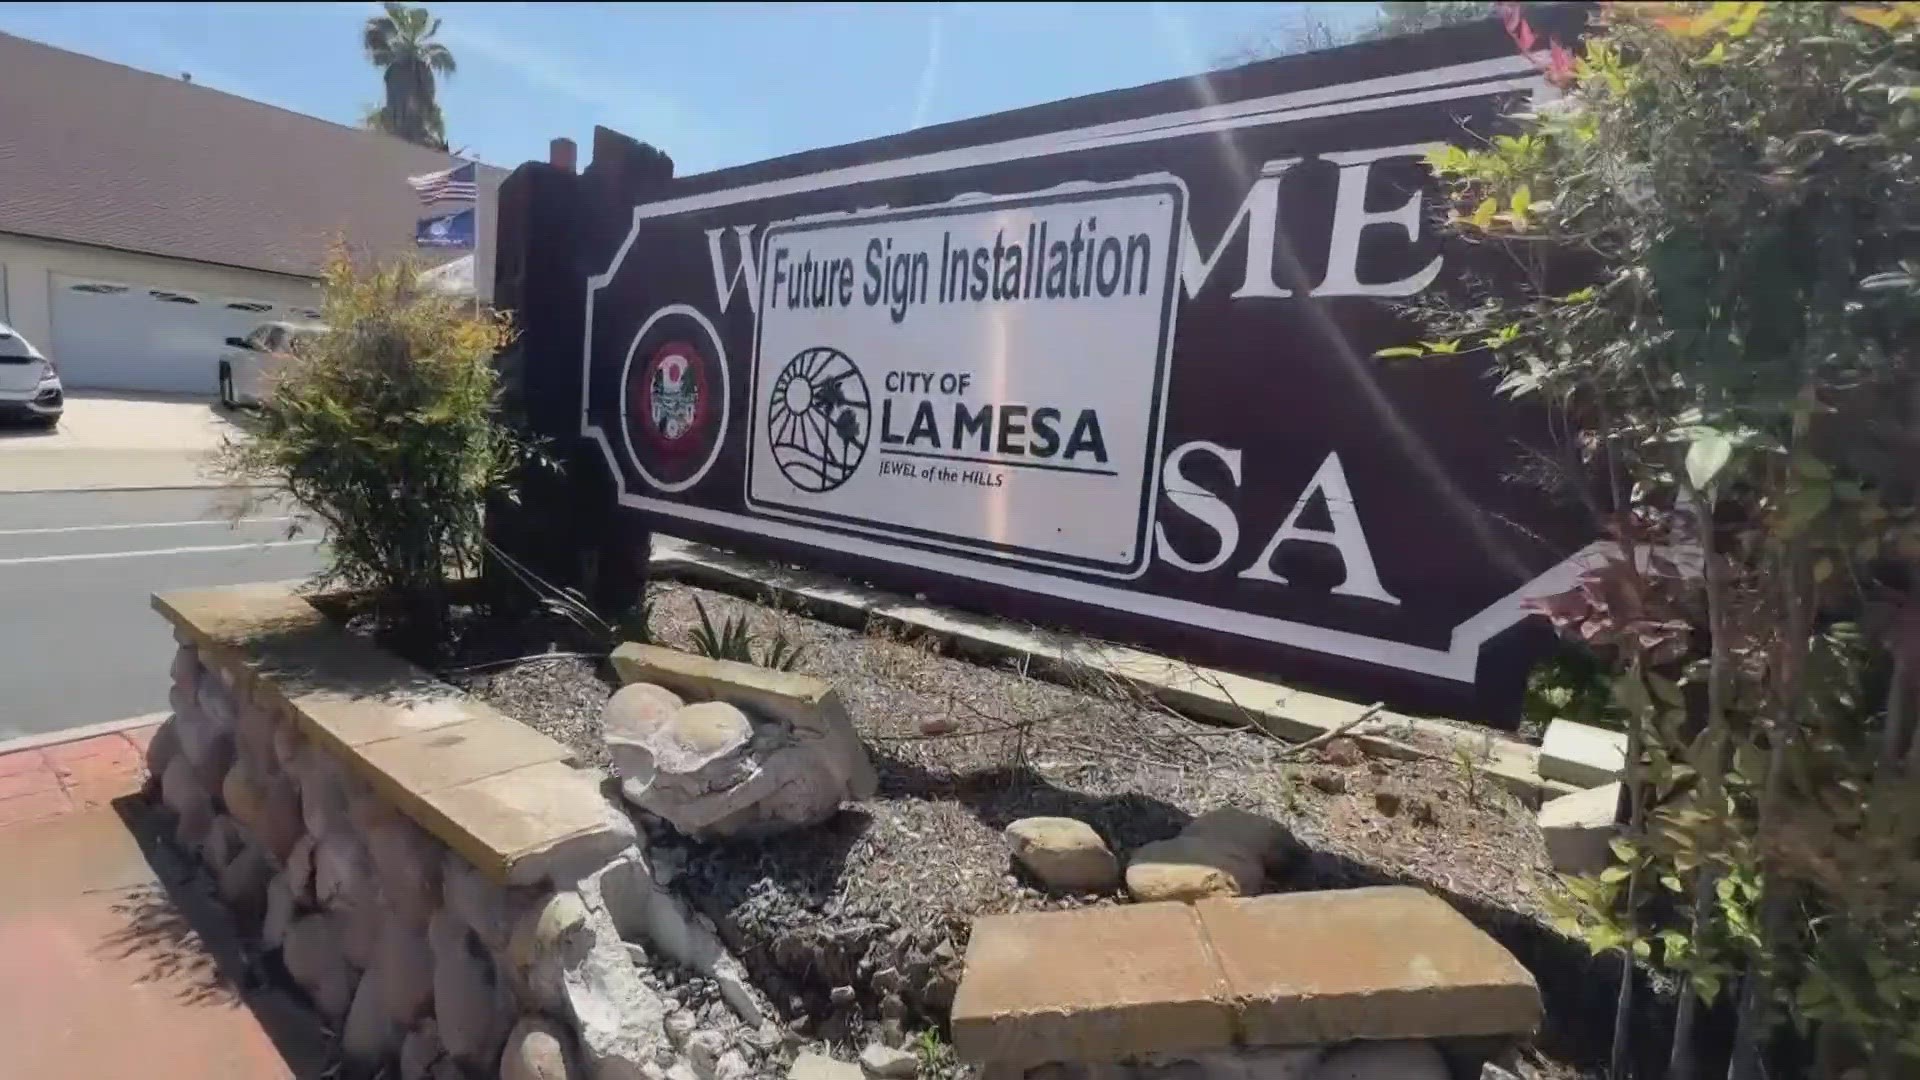 "It's an eyesore and doesn’t make La Mesa look real good," said Joe Baughles who lives in La Mesa.